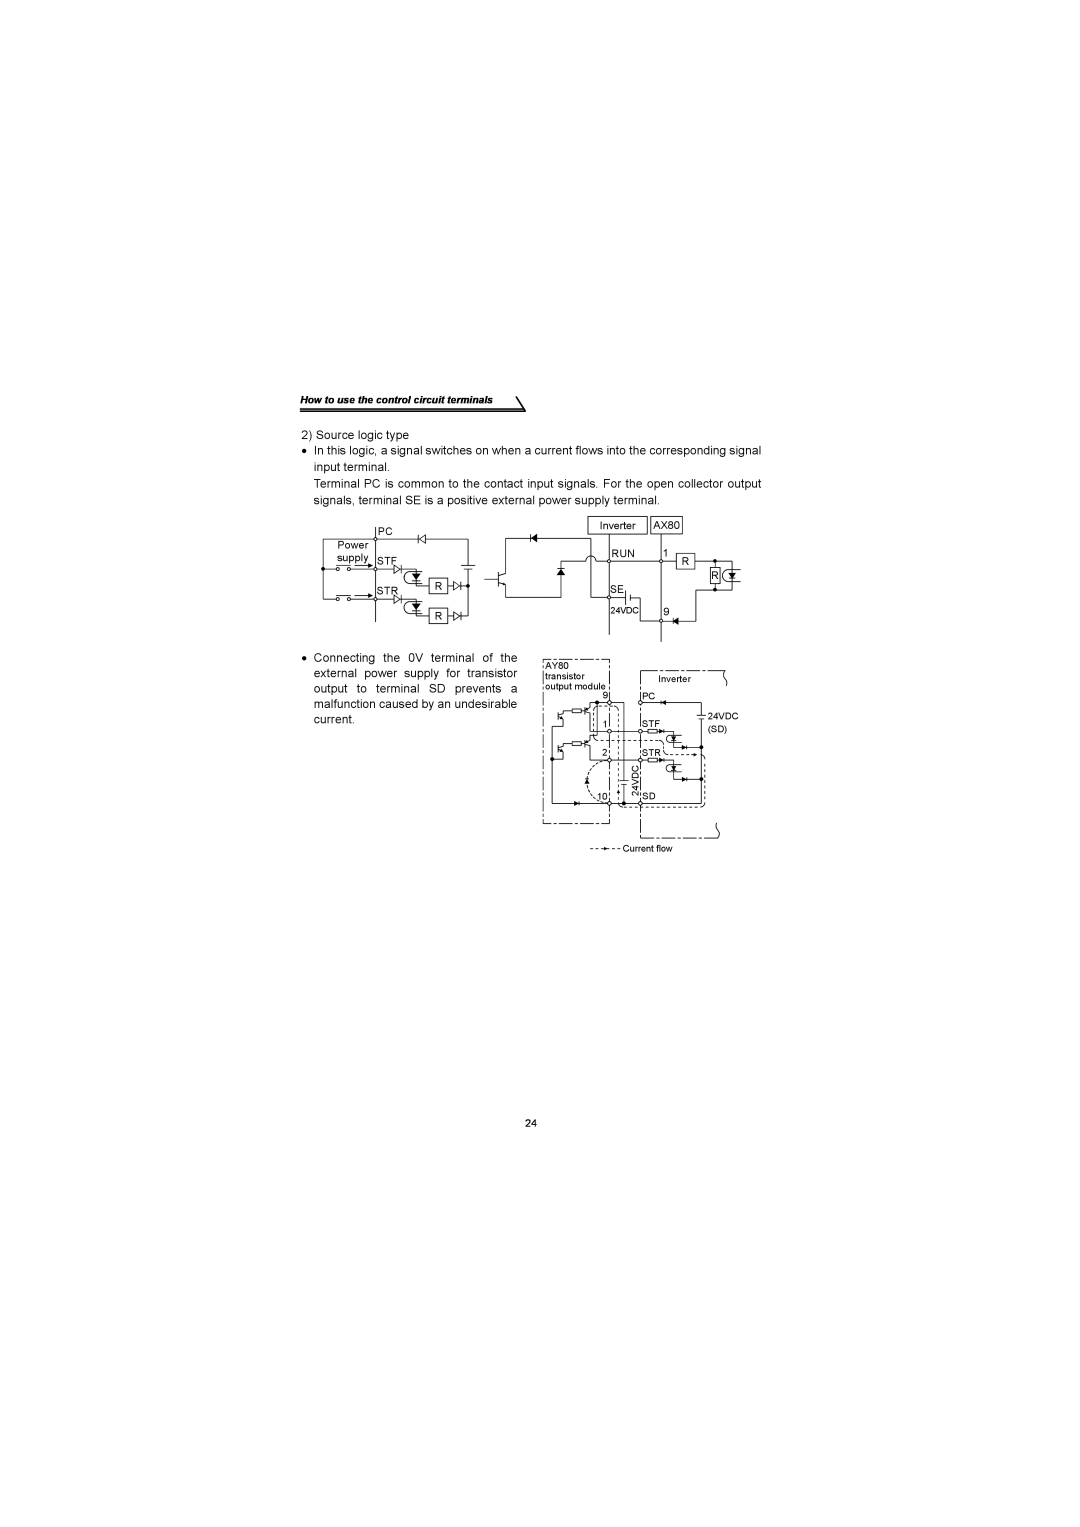 Mitsubishi Electronics FR-S500 instruction manual Source logic type 